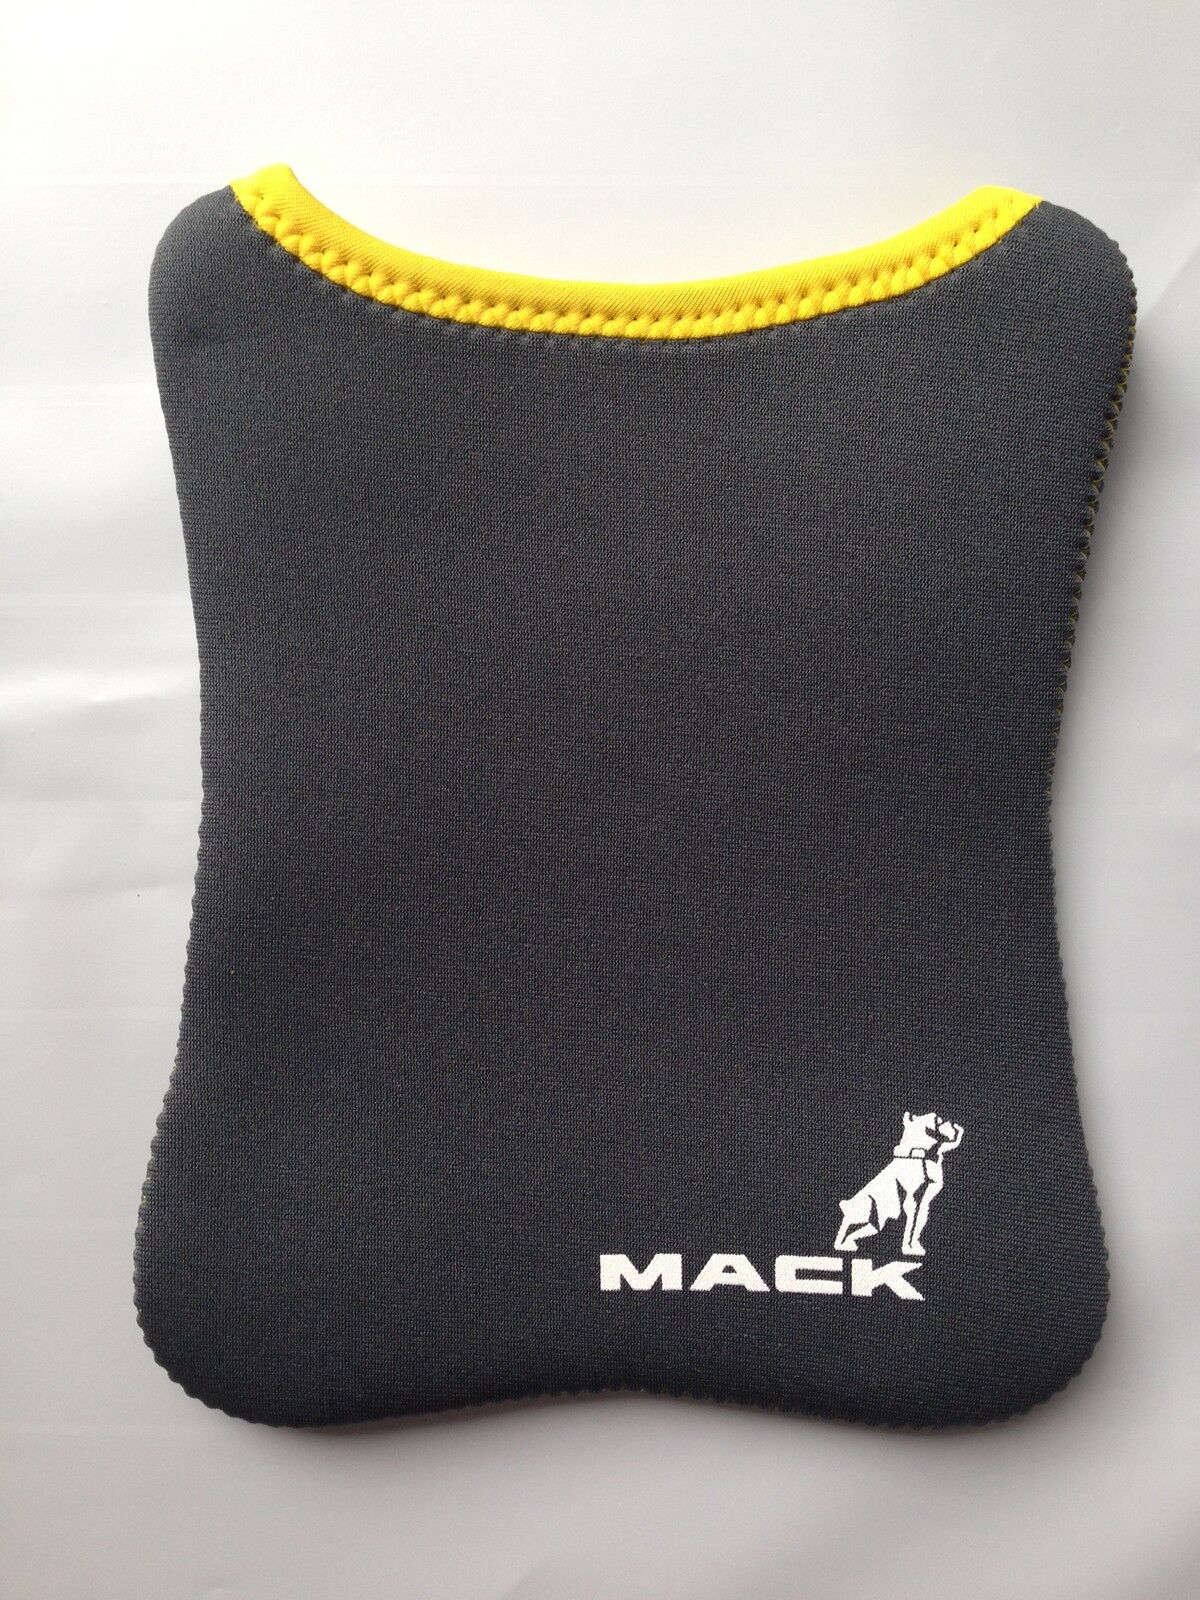 New Genuine Mack Merchandise Mack Bulldog Logo Grey Ipad Mini Neoprene Sleeve